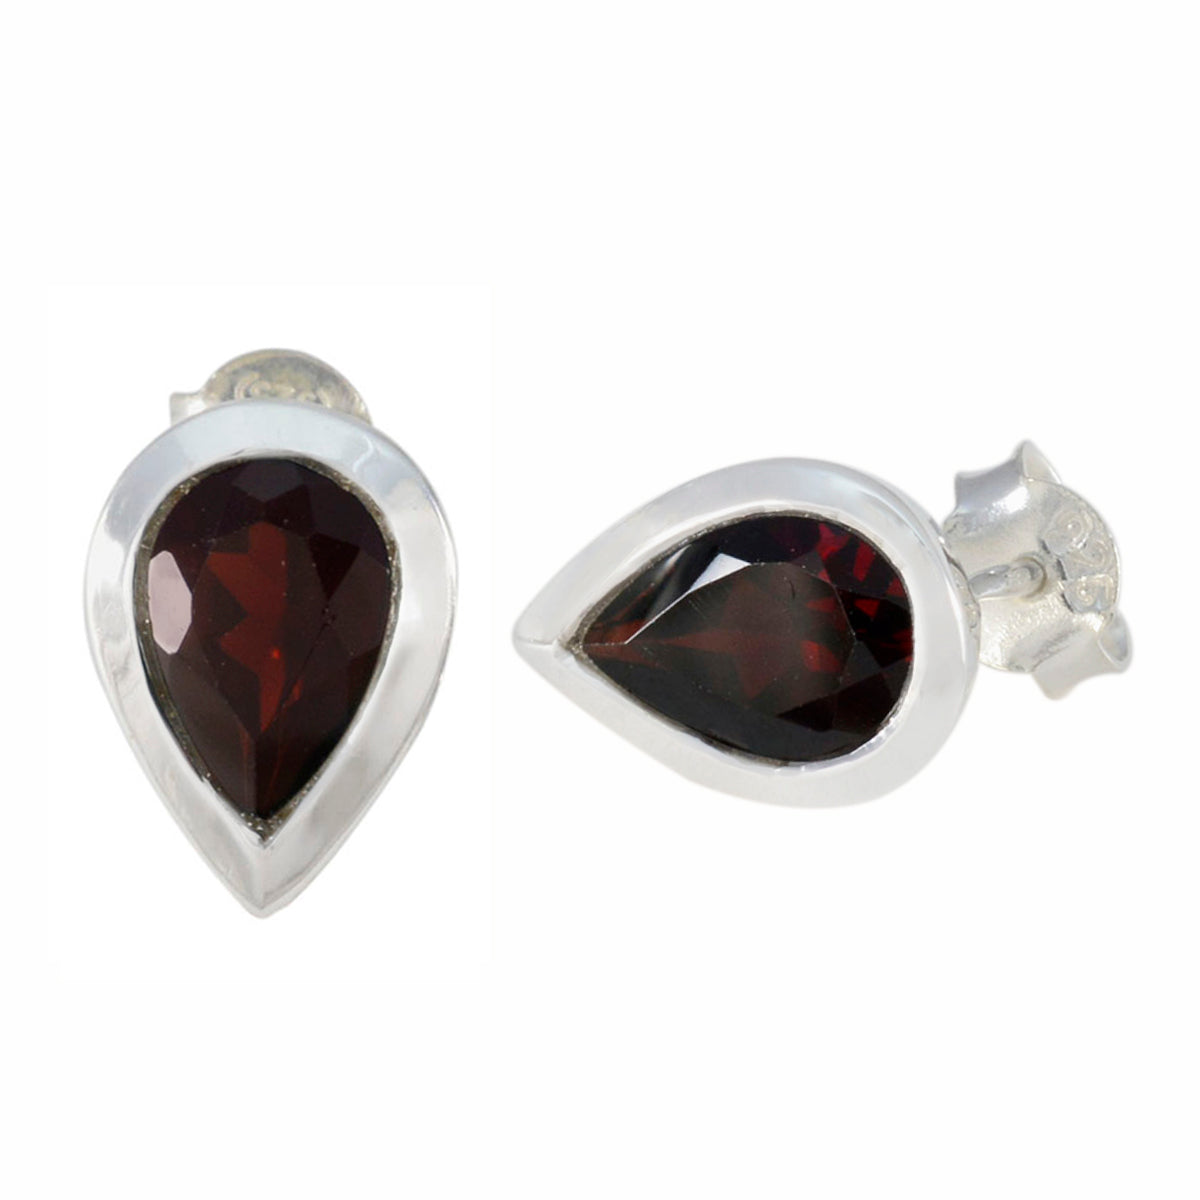 Riyo Drop-Dead Wunderschöner 925 Sterling Silber Ohrring für Demoiselle Granat Ohrring Lünettenfassung Roter Ohrring Ohrstecker